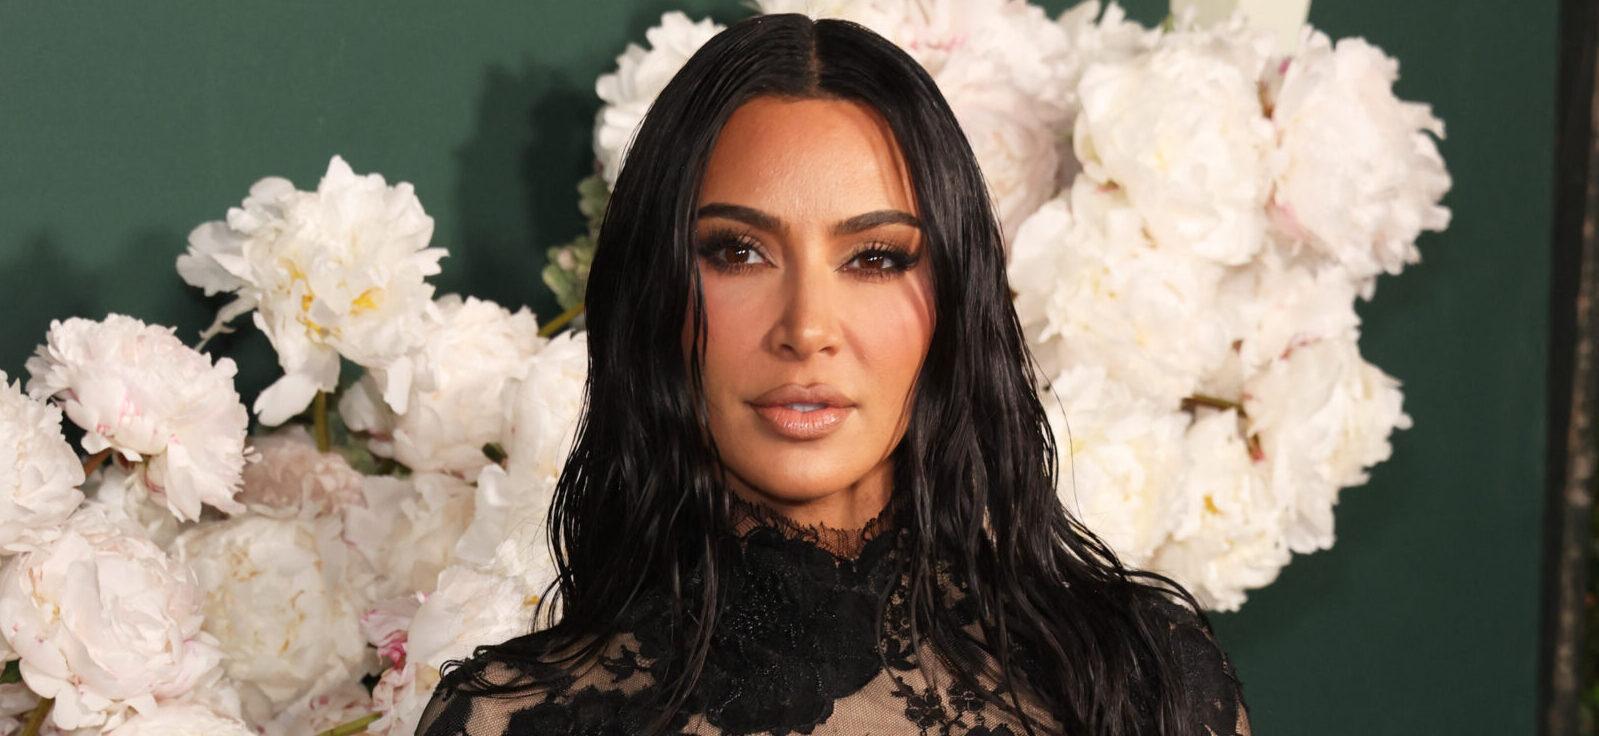 Kim Kardashian Becomes Balenciaga's Brand Ambassador After BDSM